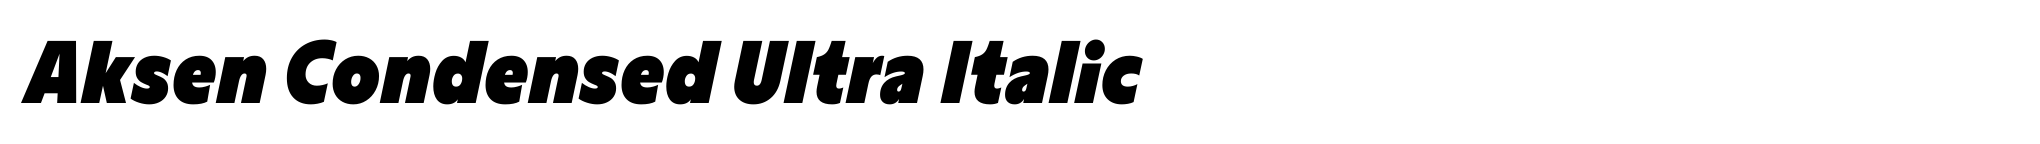 Aksen Condensed Ultra Italic image